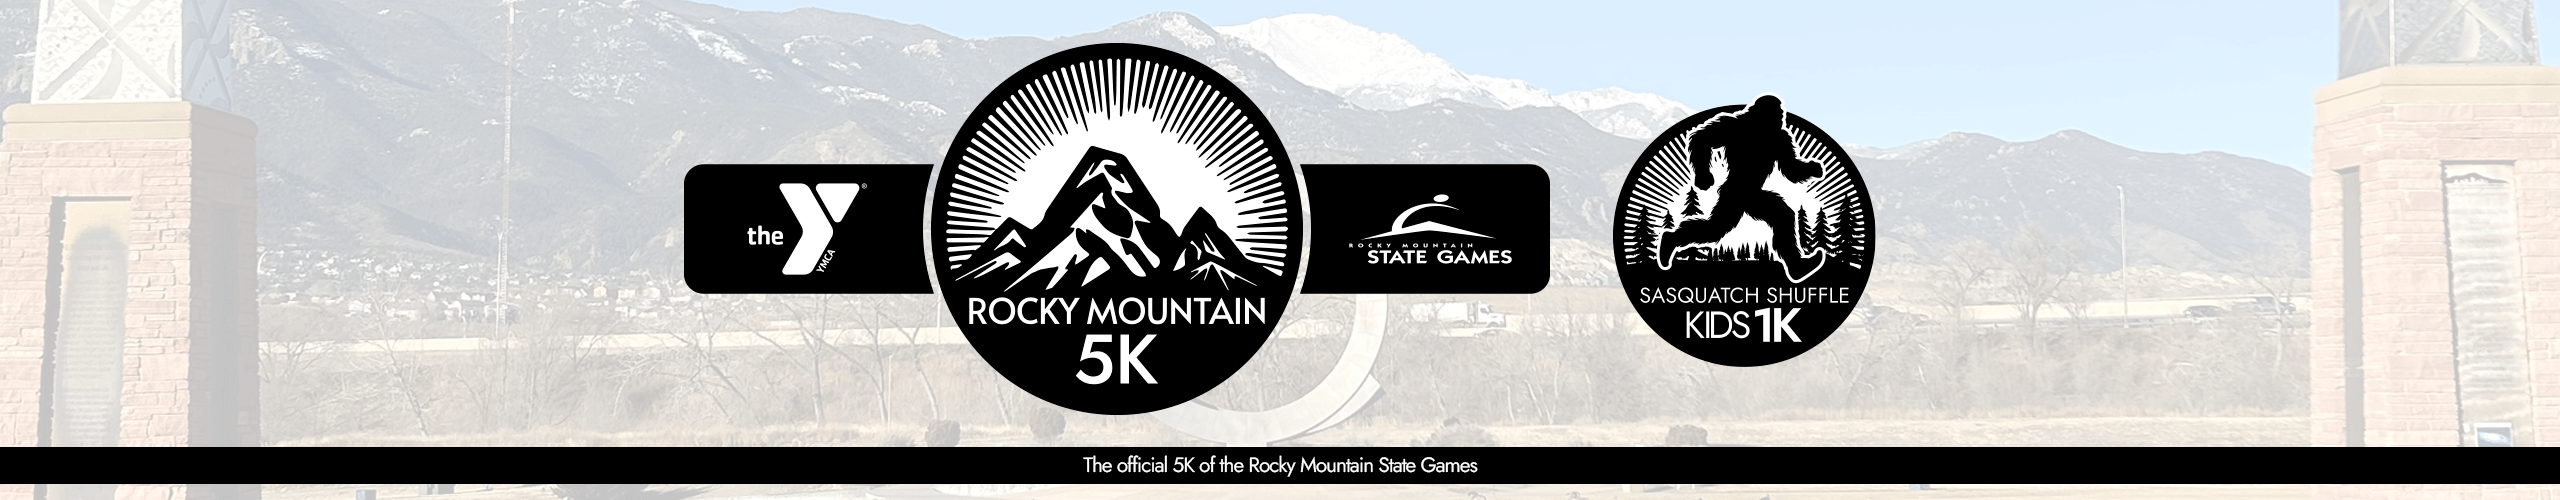 Rocky Mountain 5K Banner